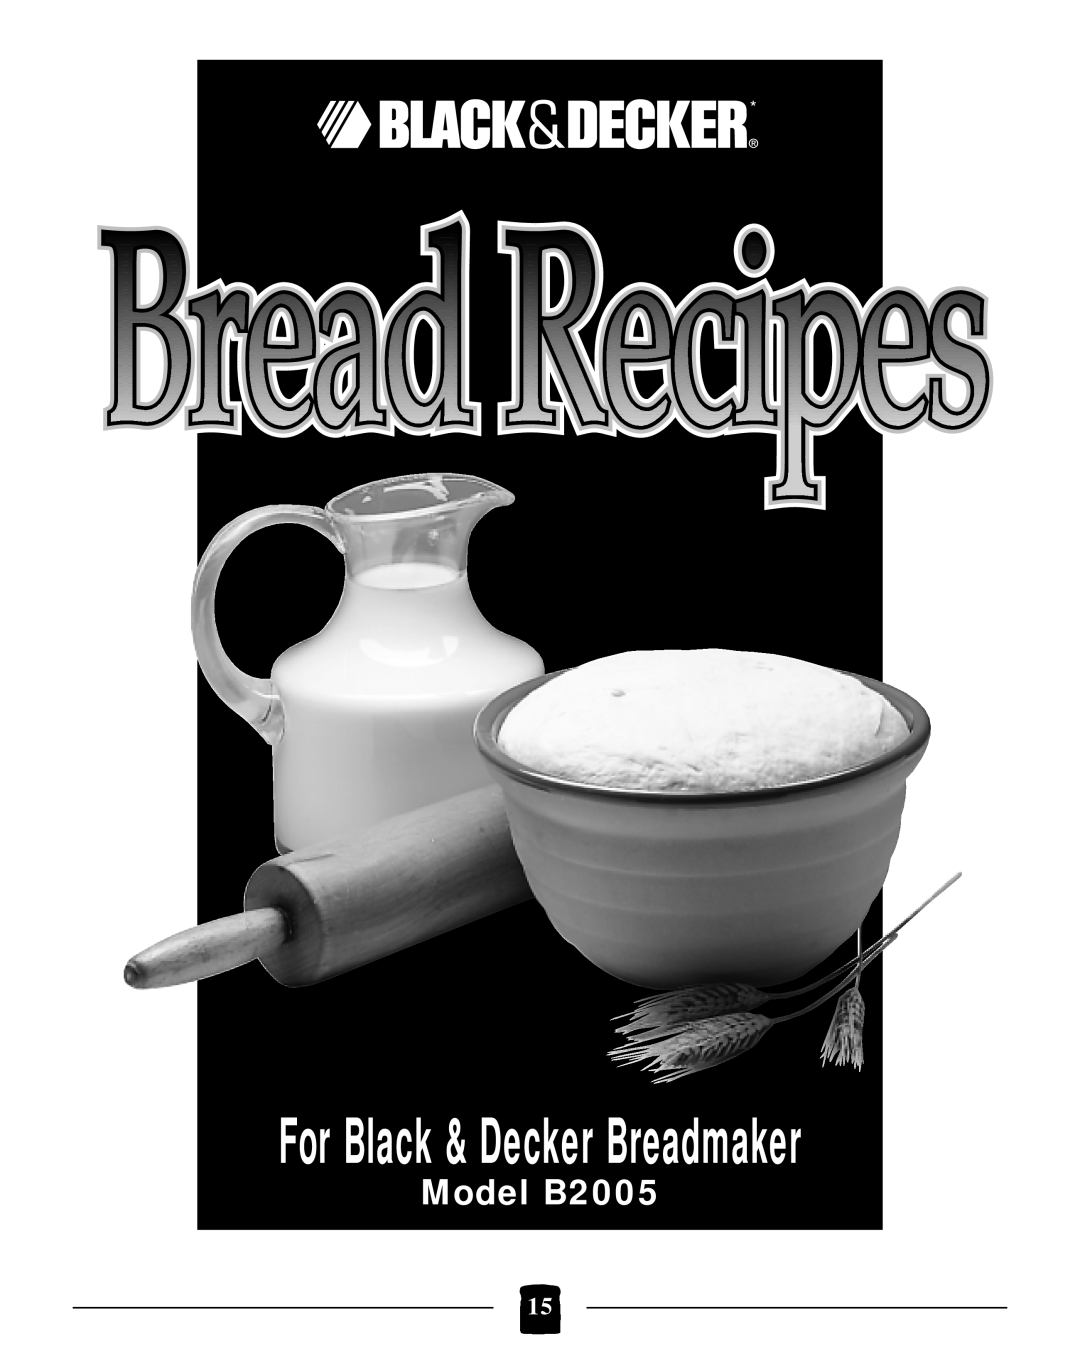 Black & Decker manual Model B2005, For Black & Decker Breadmaker 